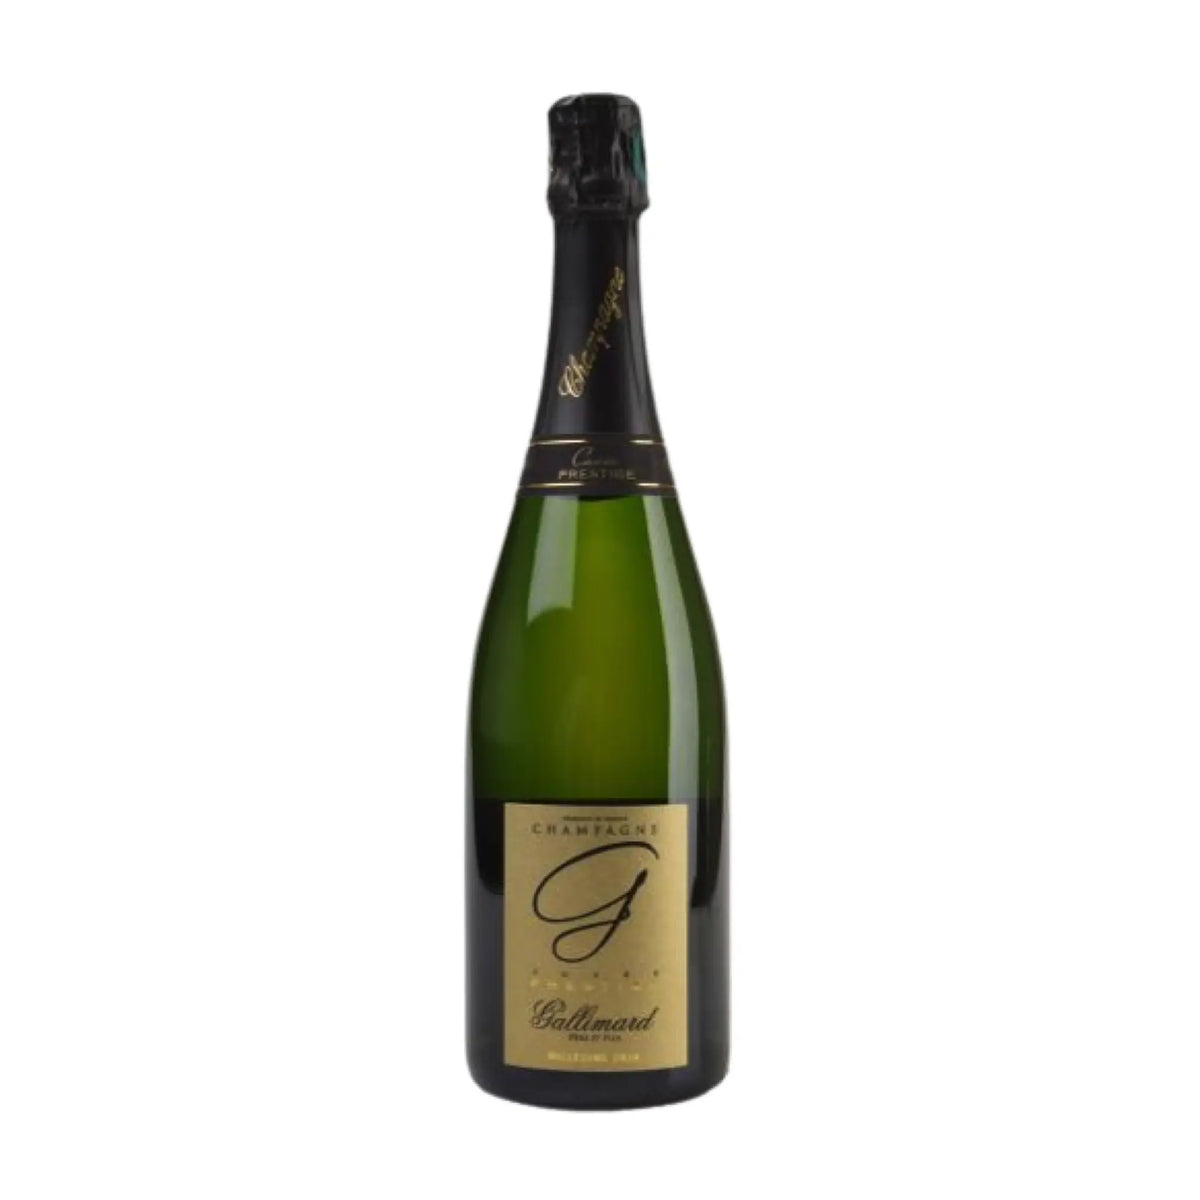 Champagne Gallimard-Schaumwein-Chardonnay, Pinot Meunier, Pinot Noir-2016 Cuvee de Prestige Millesime Champagne AOC-WINECOM